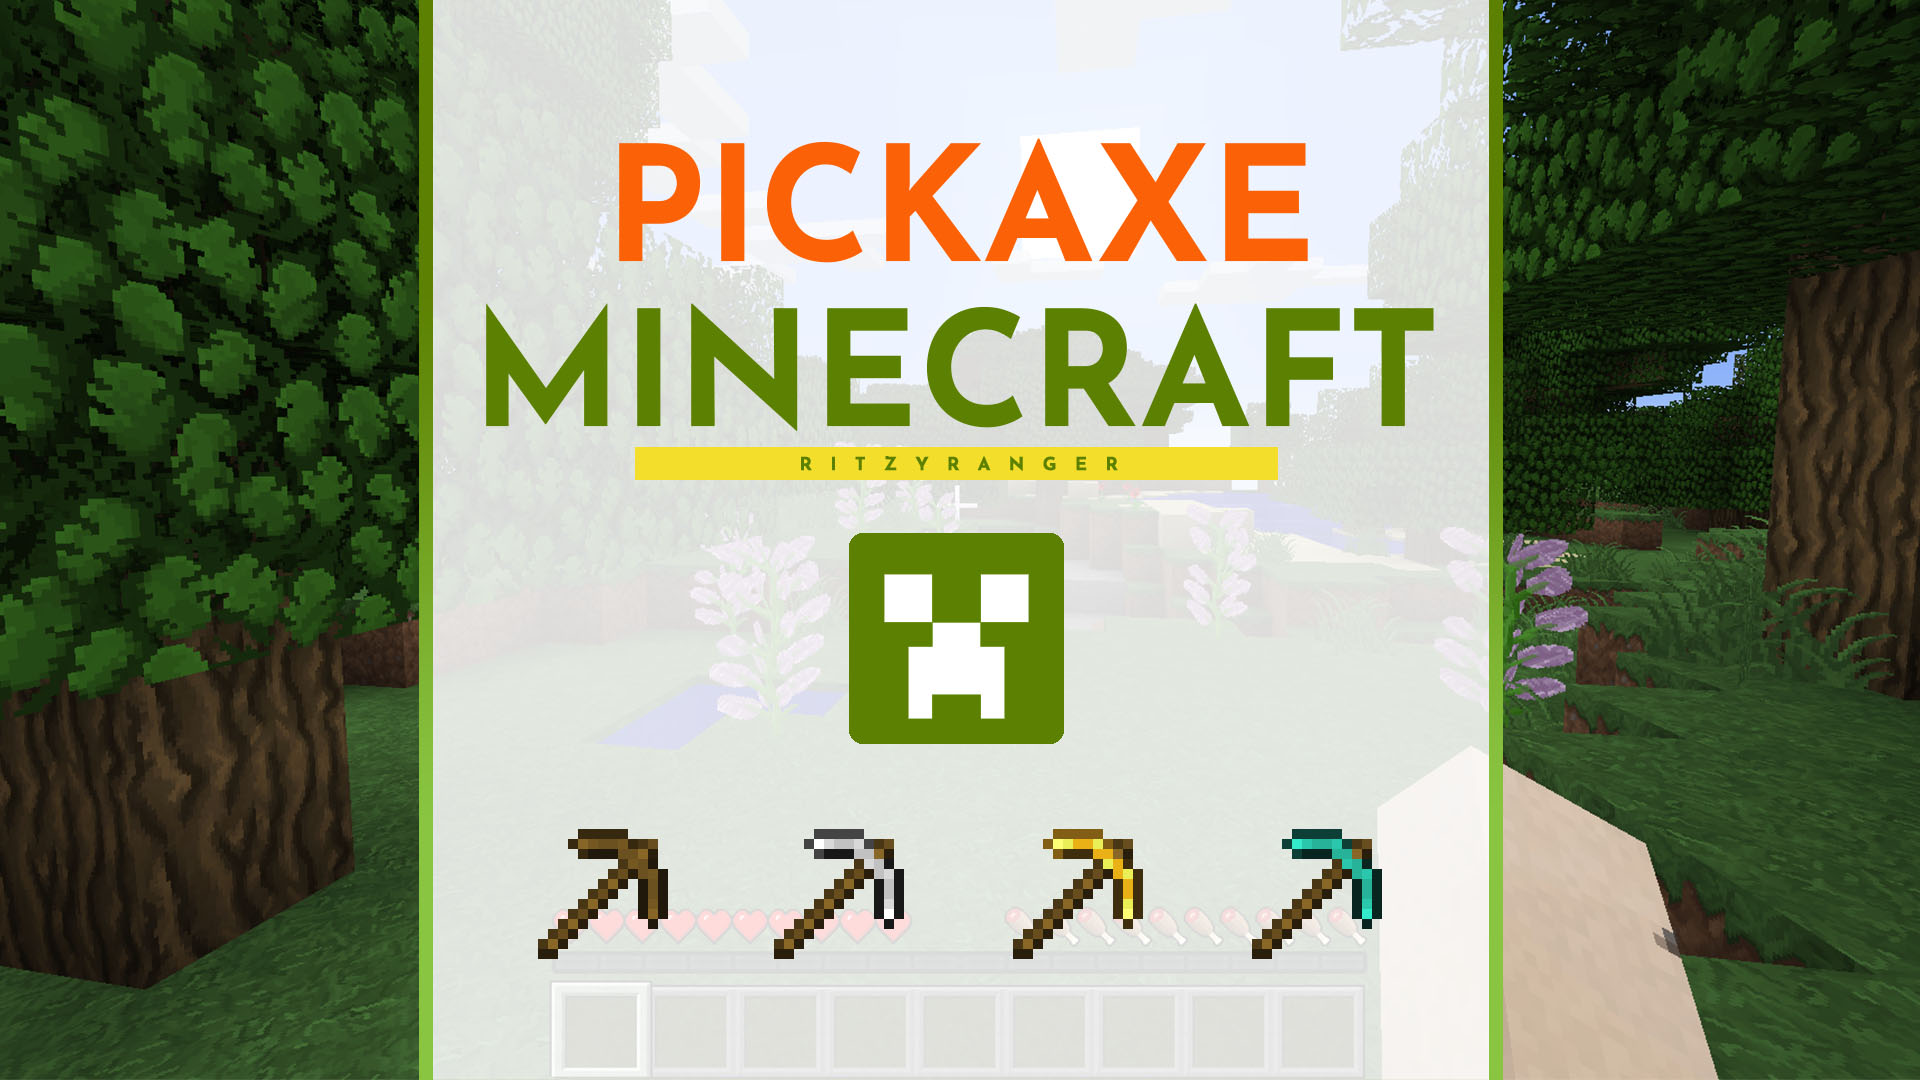 Pickaxe Minecraft